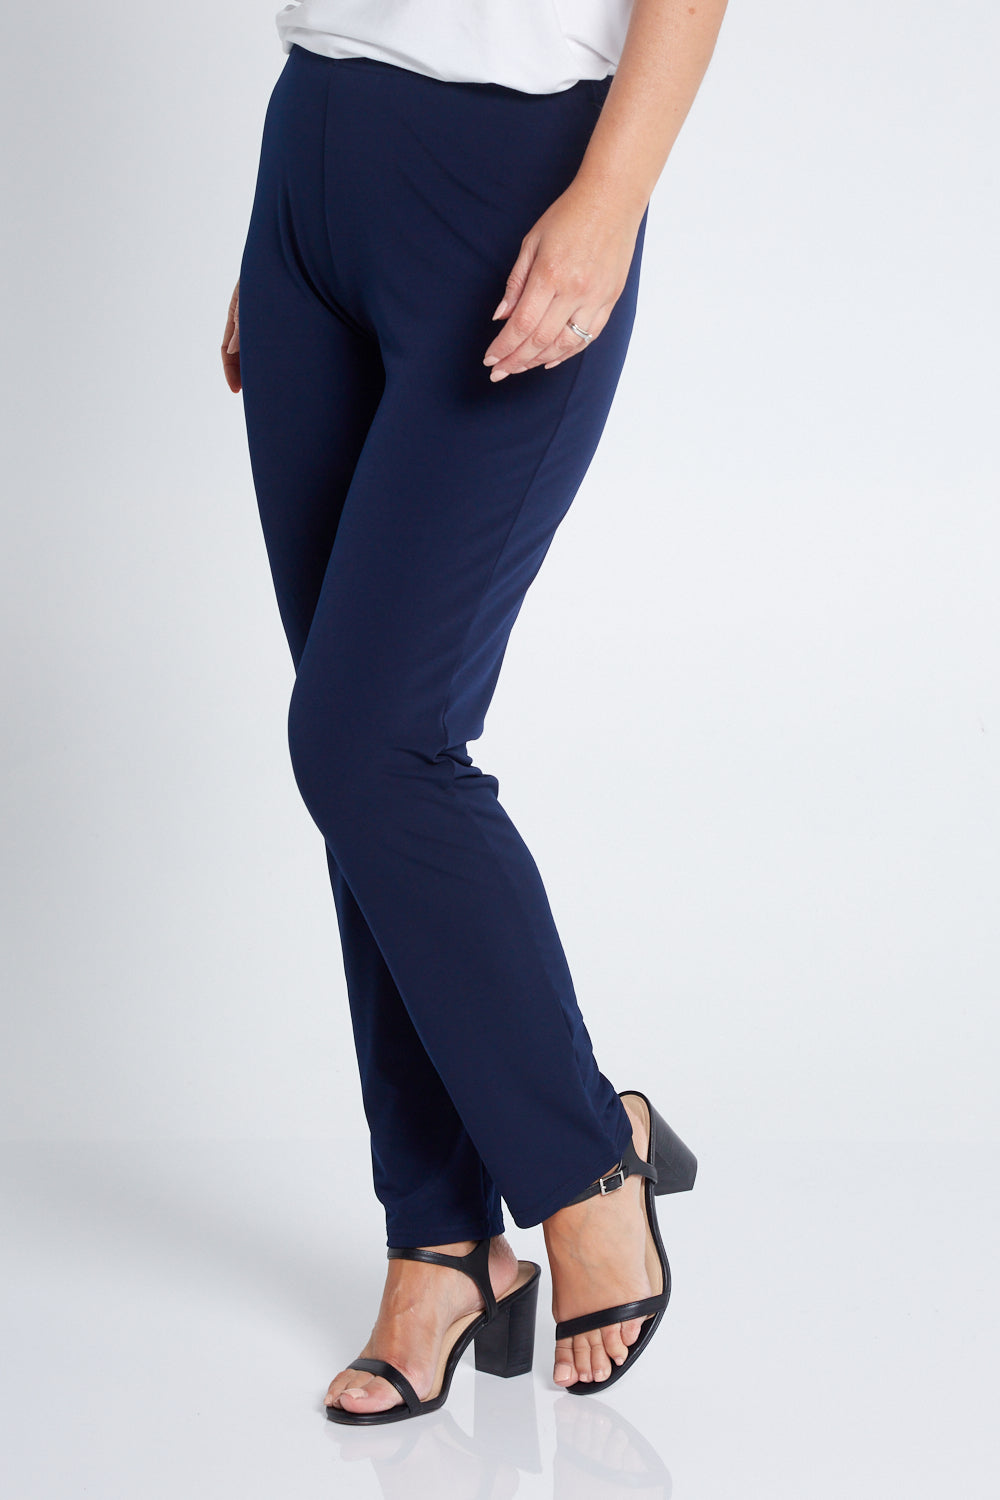 Gianna Tall Pants - Rust  Australian Made Basics – TULIO Fashion